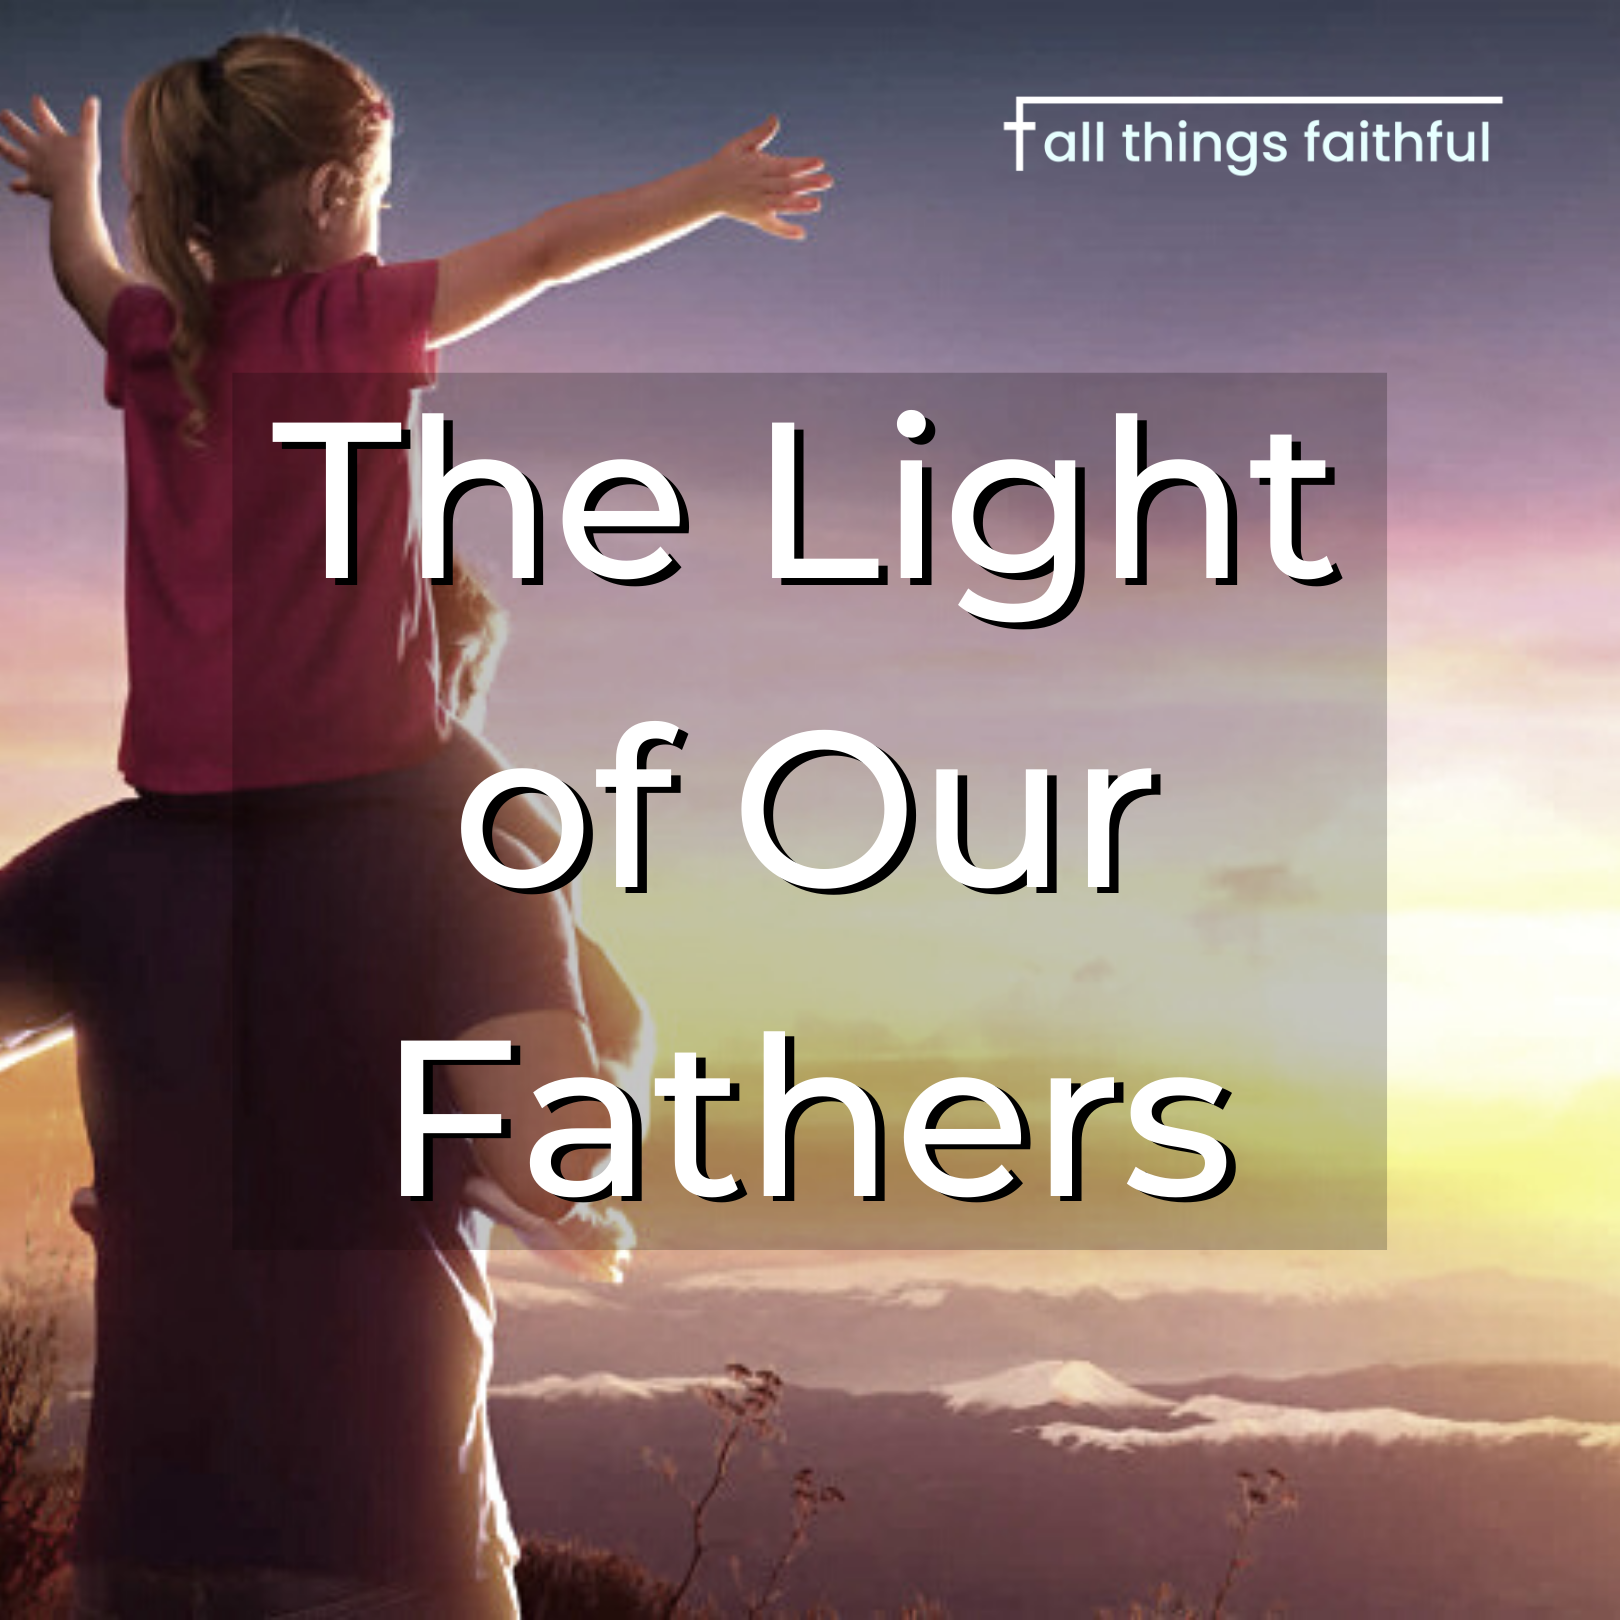 devotionals-thelightofourfathers-allthingsfaithful